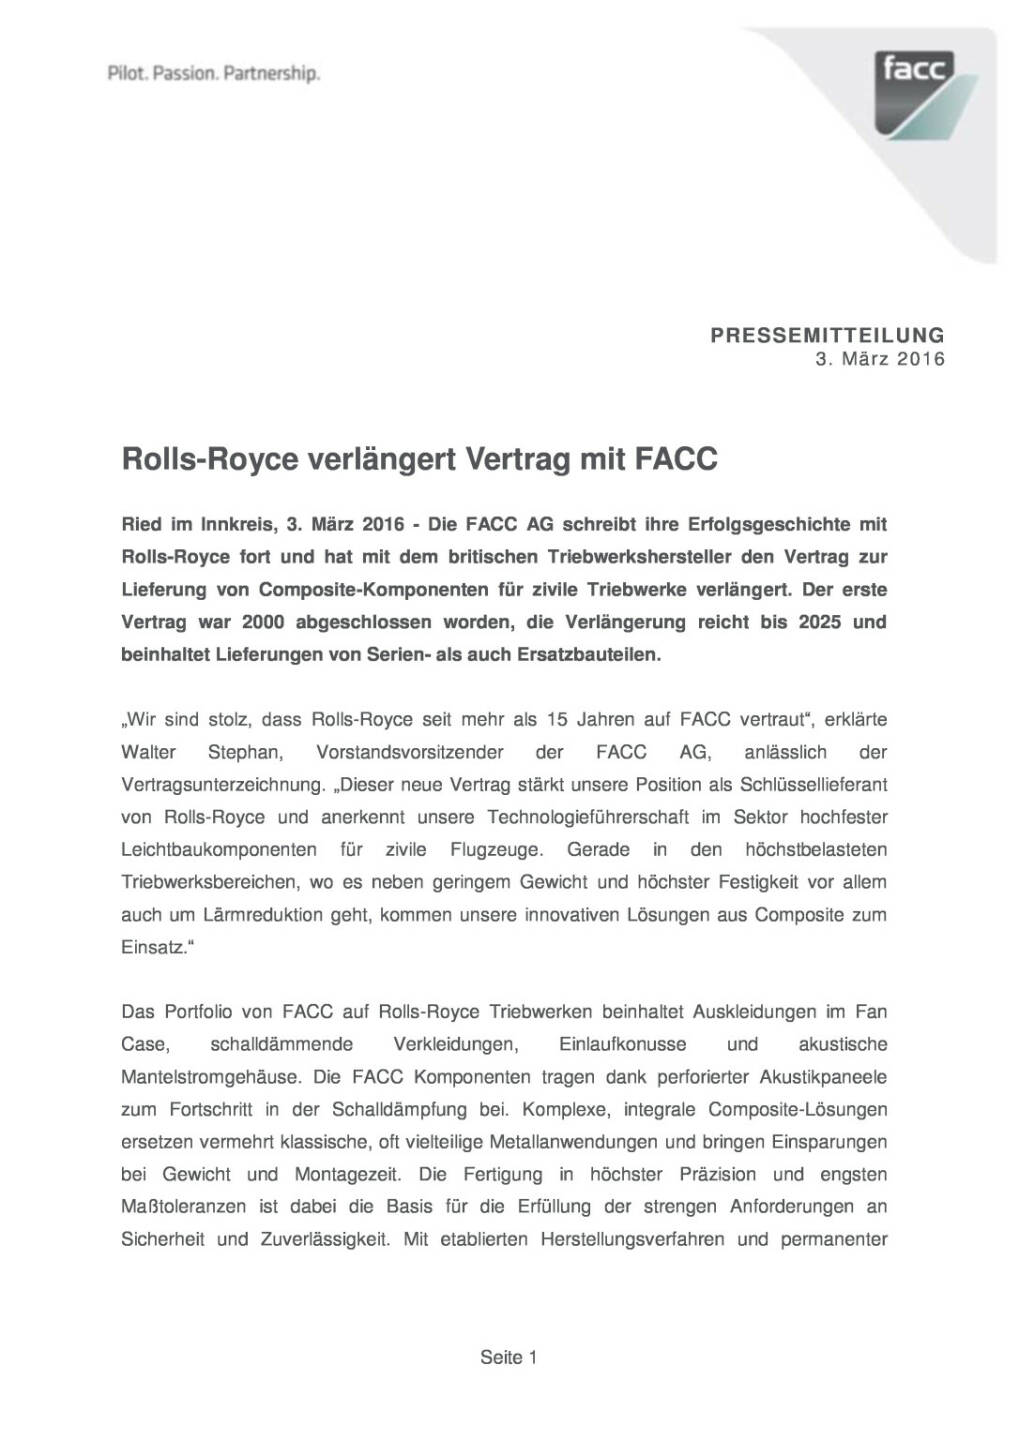 FACC Pressemitteilung: Rolls-Royce verlängert Vertrag mit FACC, Seite 1/4, komplettes Dokument unter http://boerse-social.com/static/uploads/file_726_facc_pressemitteilung_rolls-royce_verlangert_vertrag_mit_facc.pdf